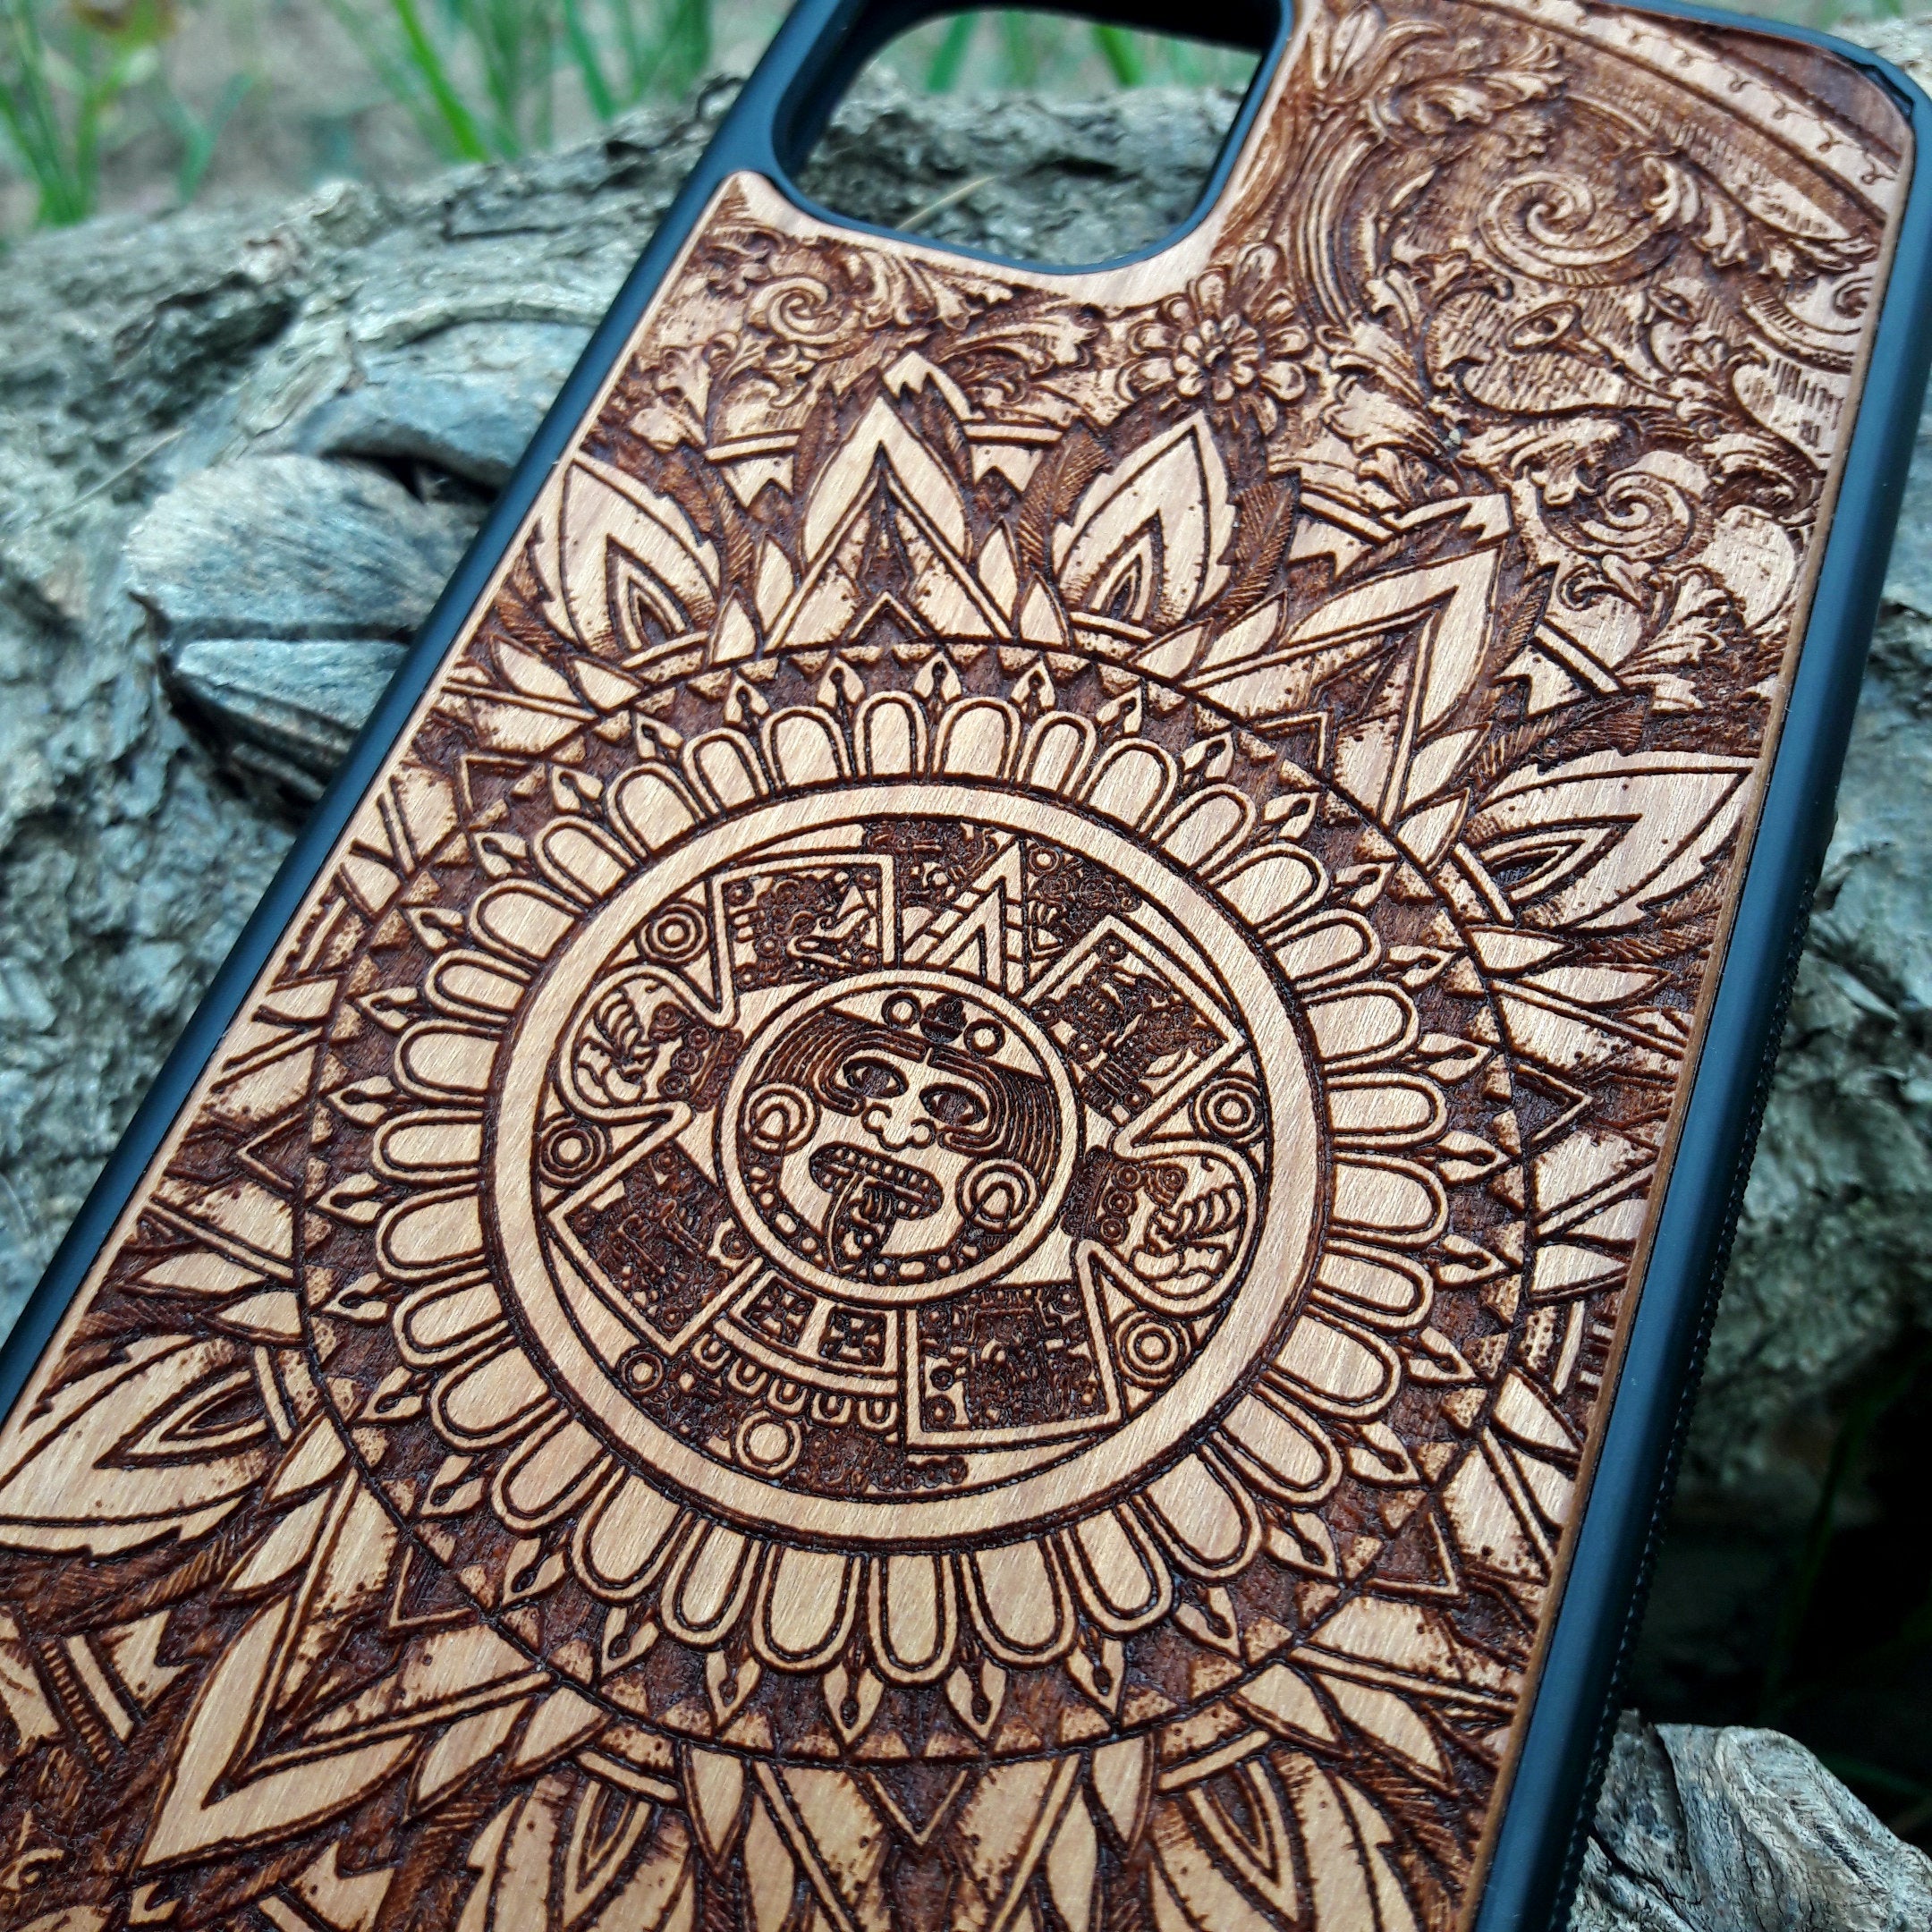 Wood iPhone 12 Case with Mandala Engraving PRO, MAX & MINI